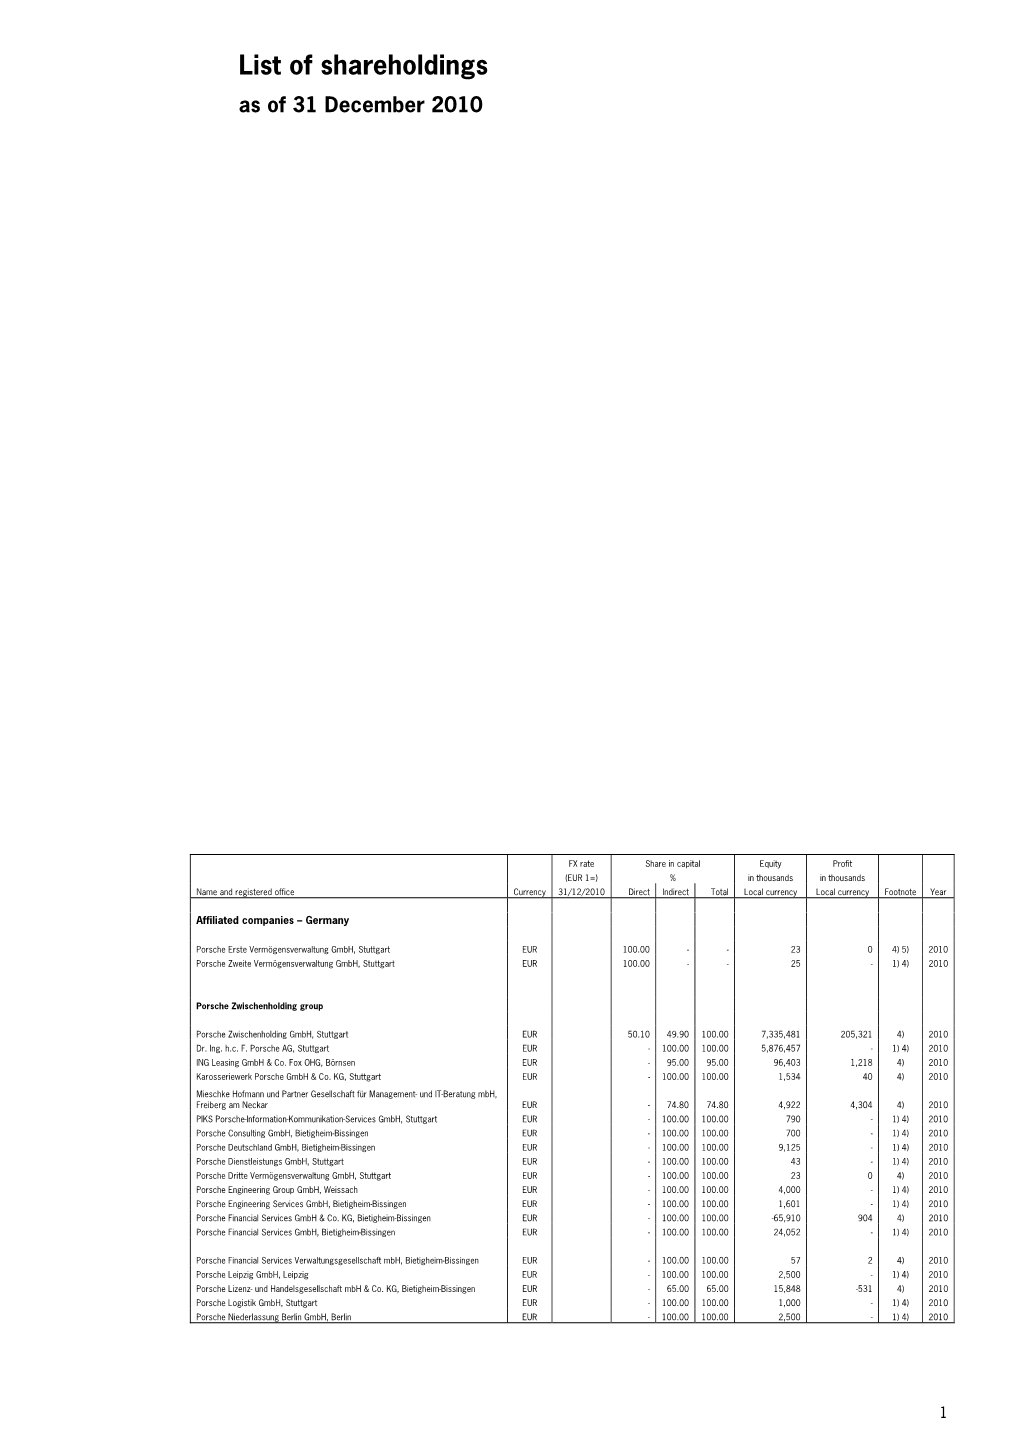 List of Participations of Porsche SE As of 31. December 2010